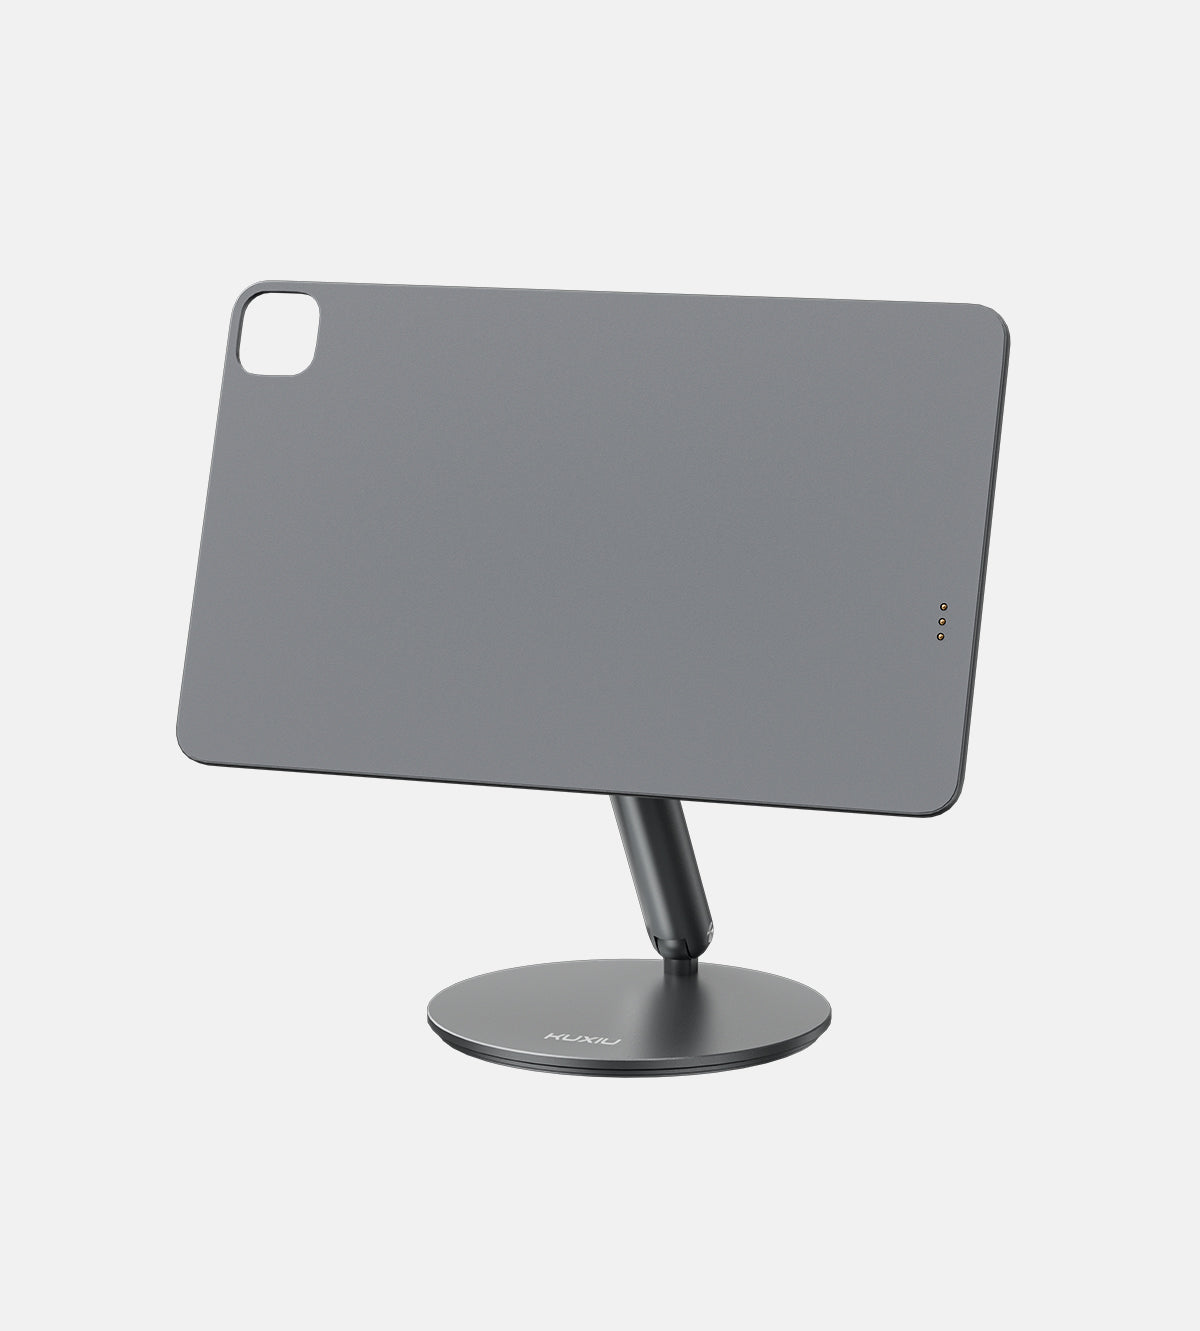 KUXIU X44 Pro MAX iPad Magnetic Charging Stand